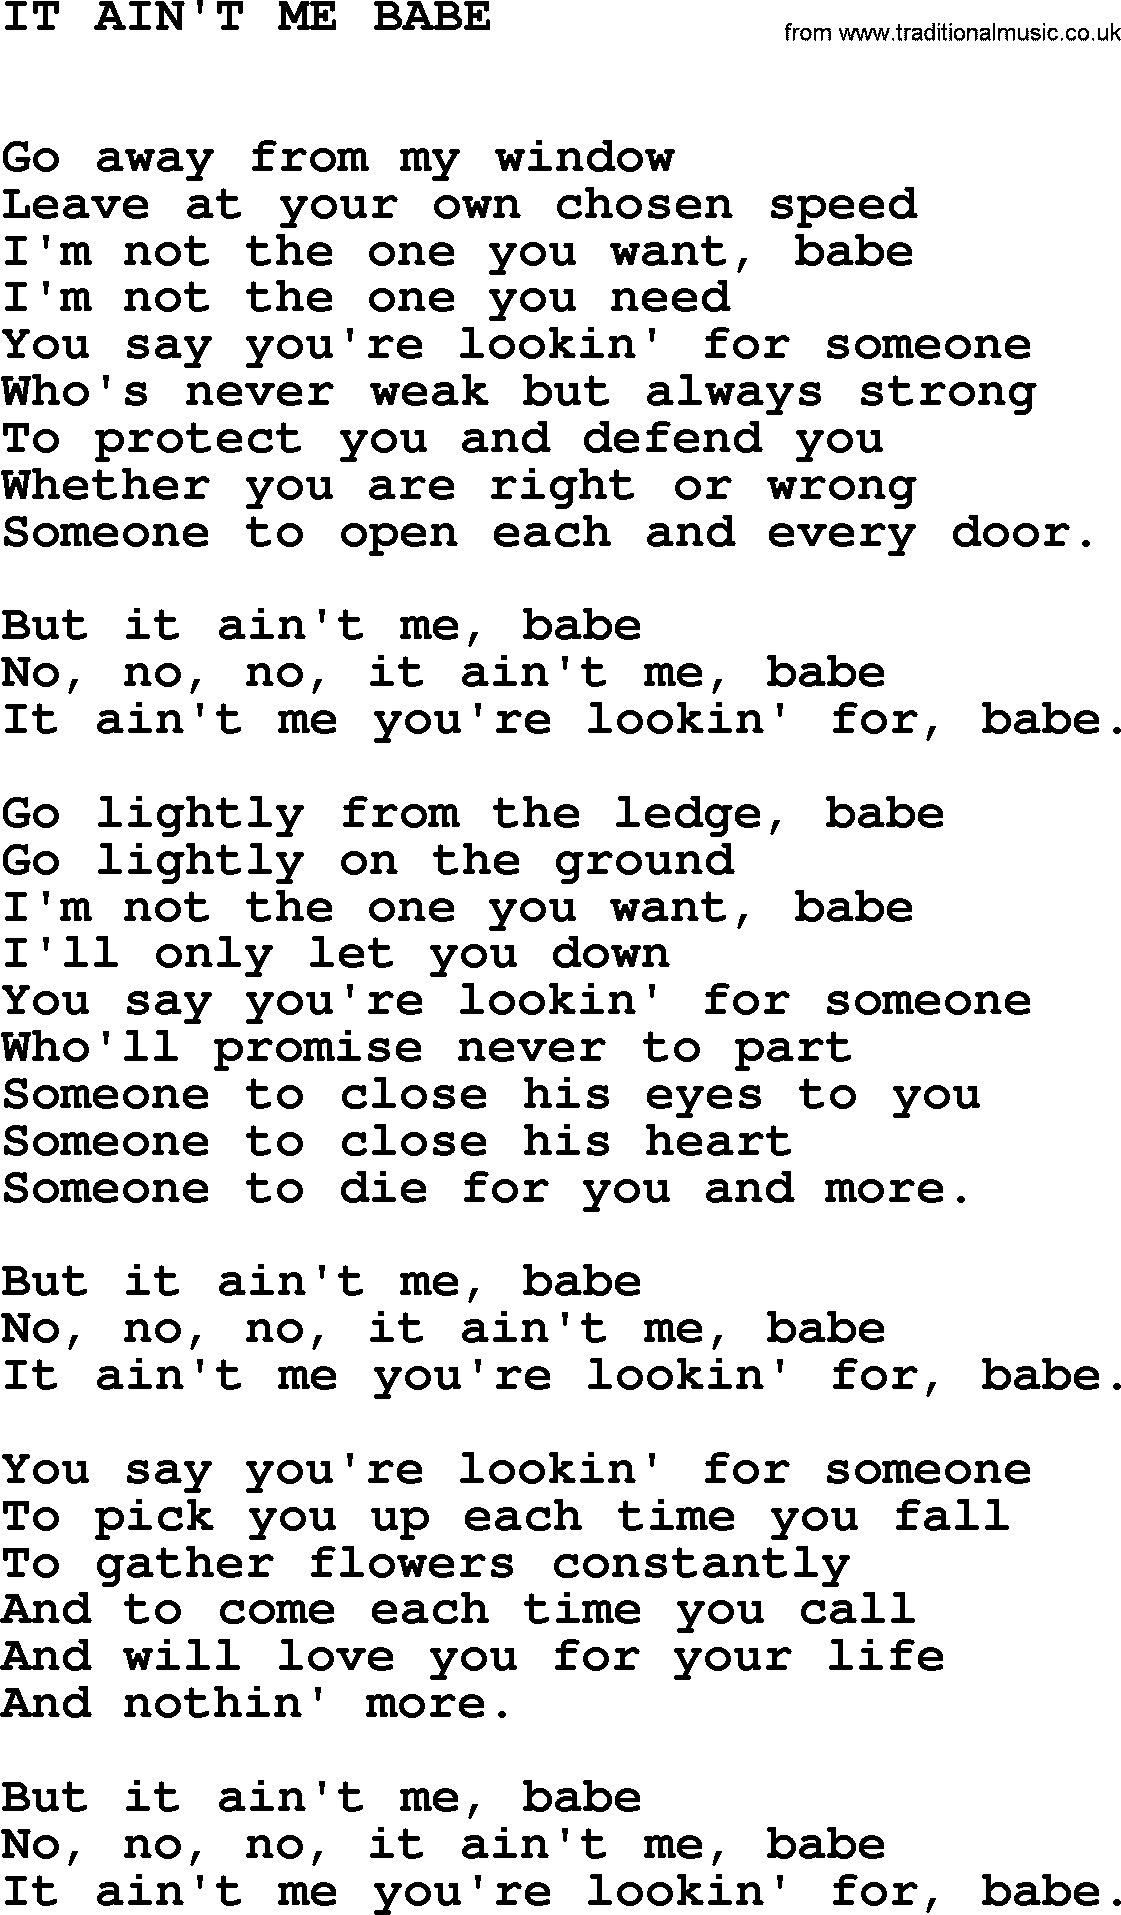 Johnny Cash song It Ain't Me Babe.txt lyrics